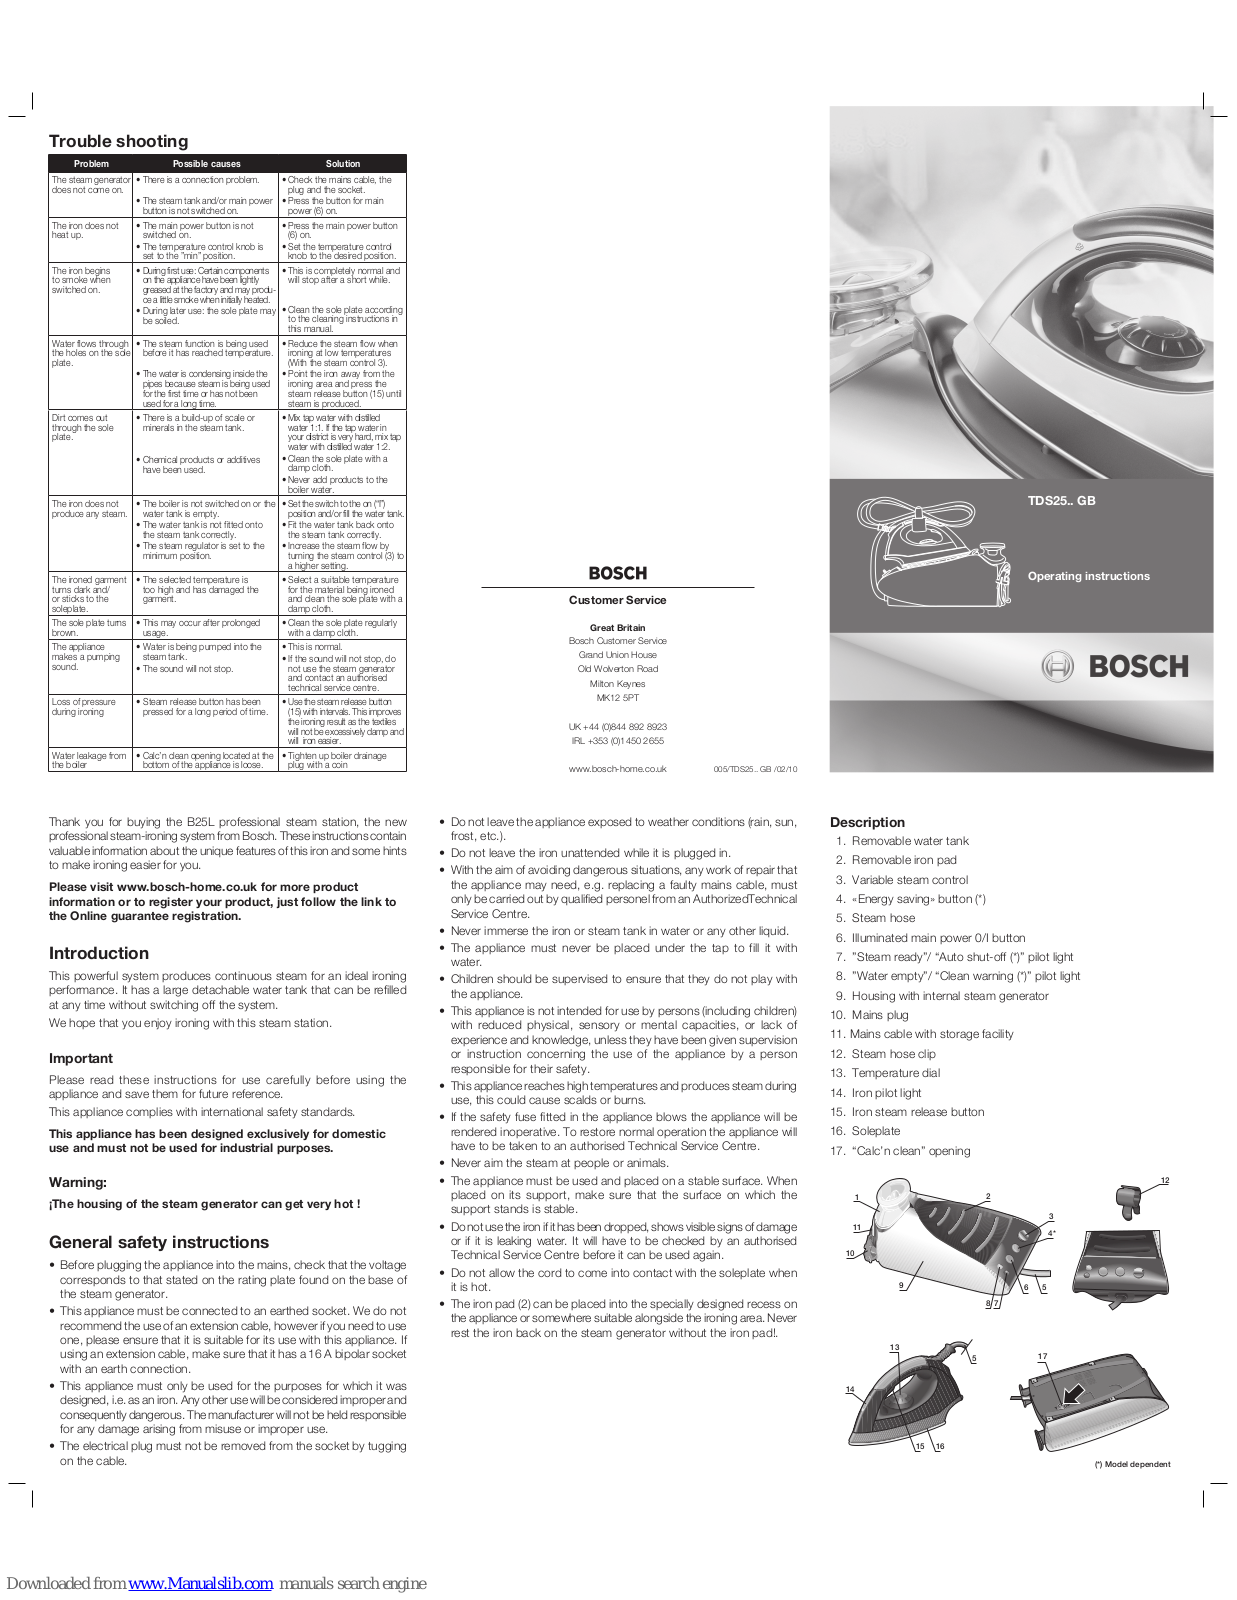 Bosch TDS25.. GB Operating Instructions Manual